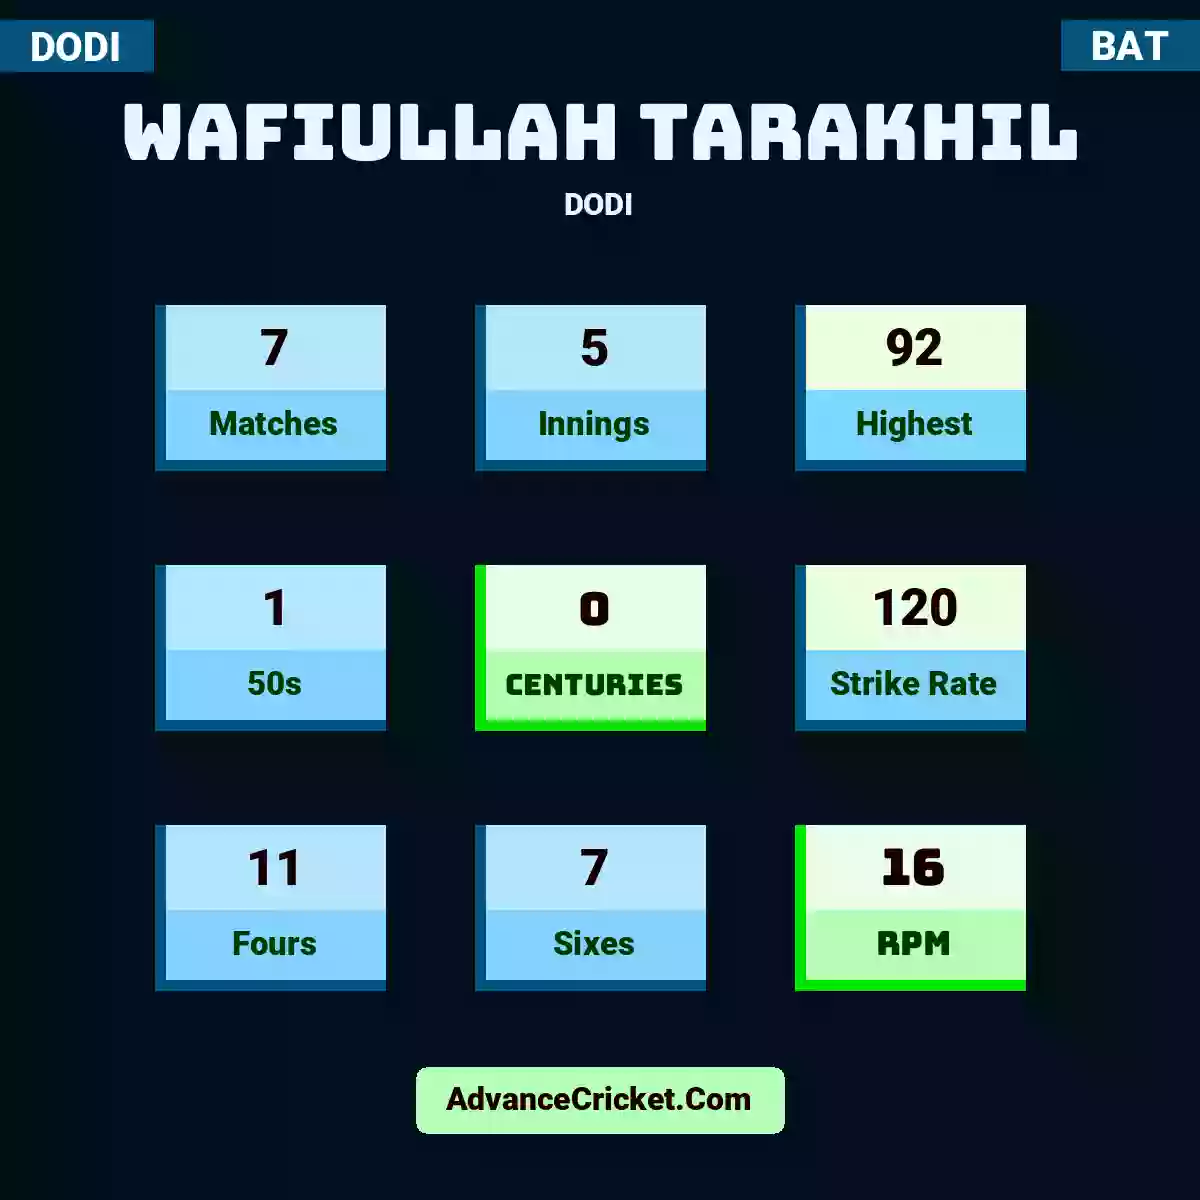 Wafiullah Tarakhil DODI , Wafiullah Tarakhil played 7 matches, scored 92 runs as highest, 1 half-centuries, and 0 centuries, with a strike rate of 120. W.Tarakhil hit 11 fours and 7 sixes, with an RPM of 16.